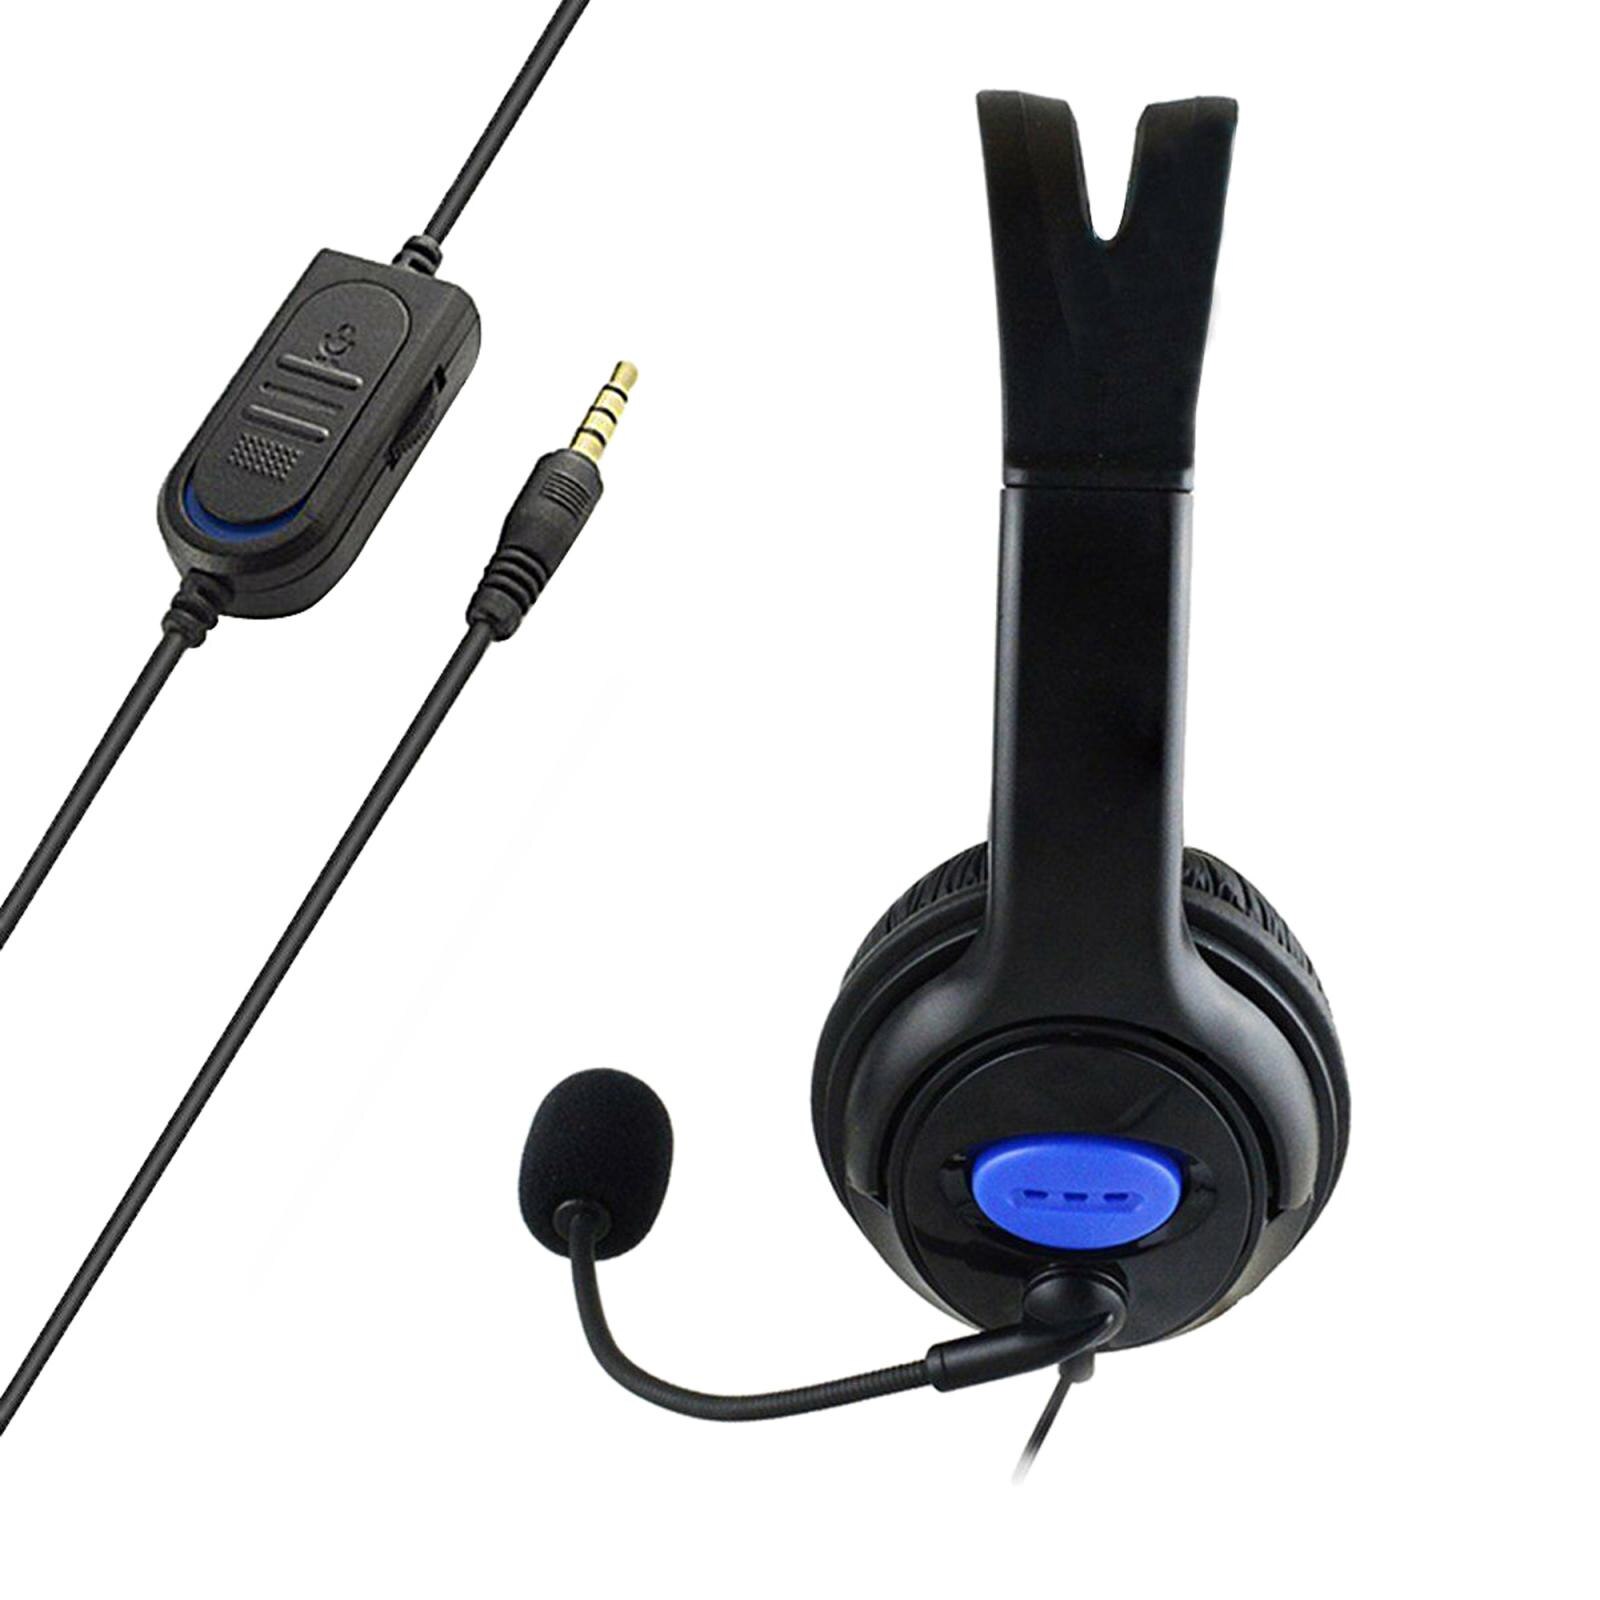 Bedrade Usb Headset Met Noise Cancelling Microfoon Computer Teleconferentie